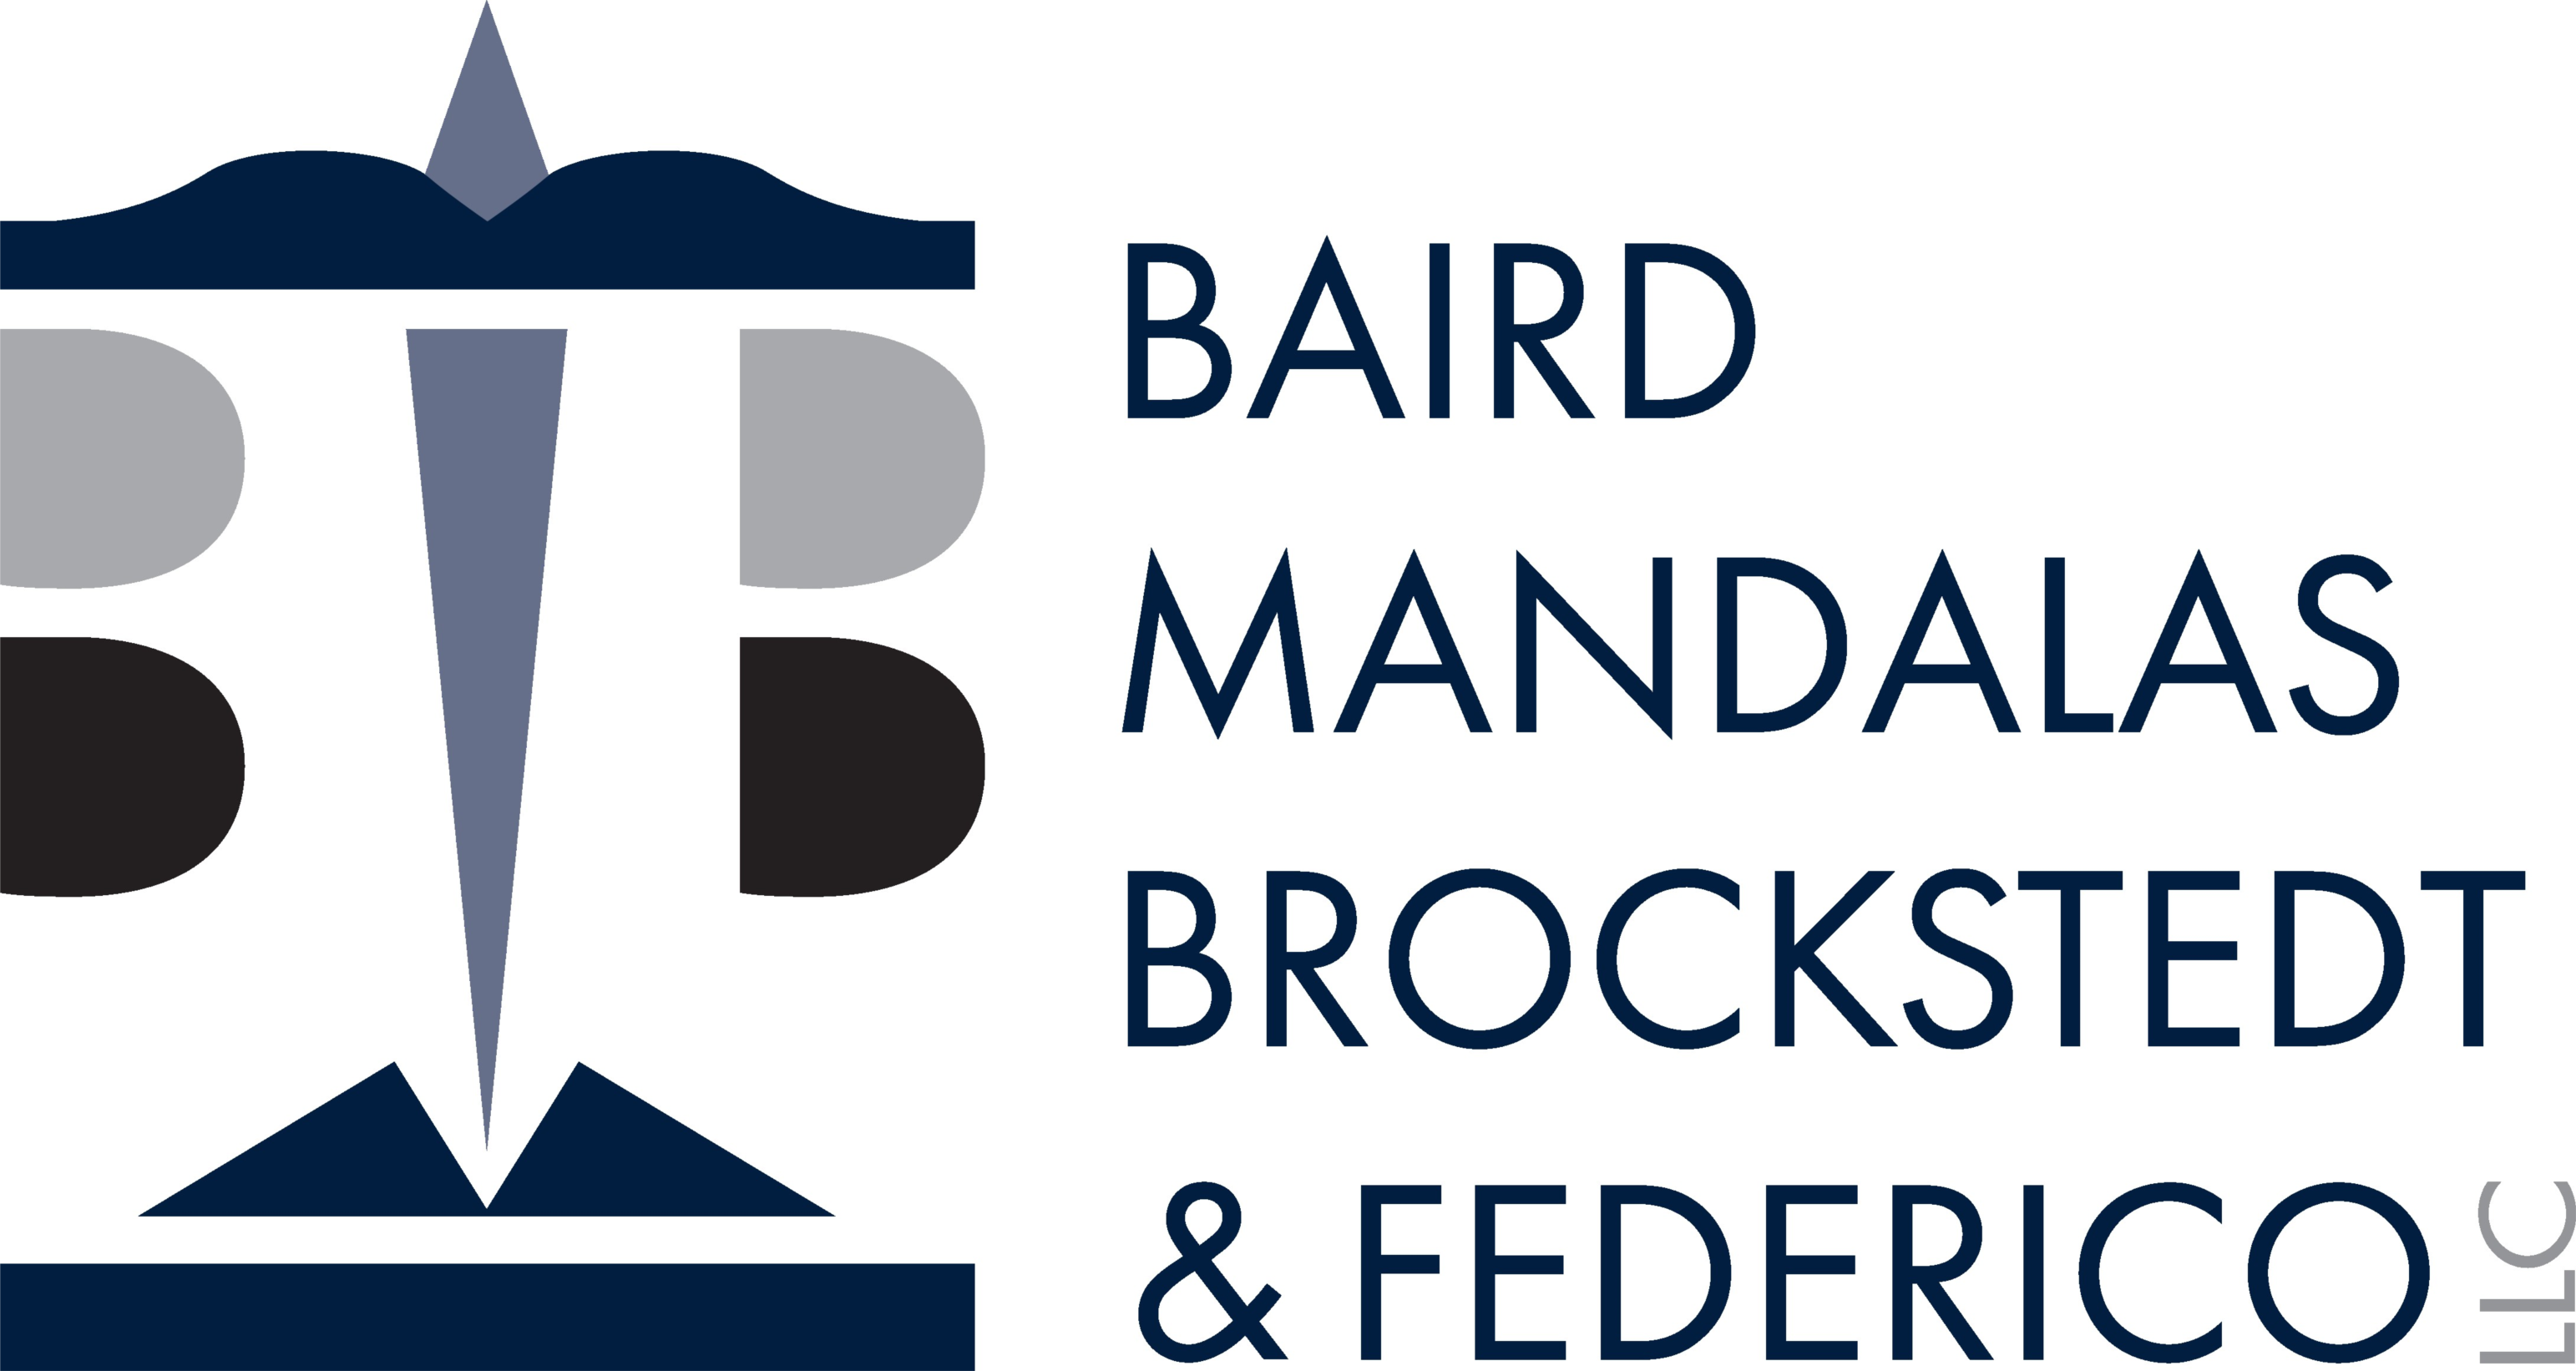 Baird Mandalas Brockstedt & Federico LLC Company Logo